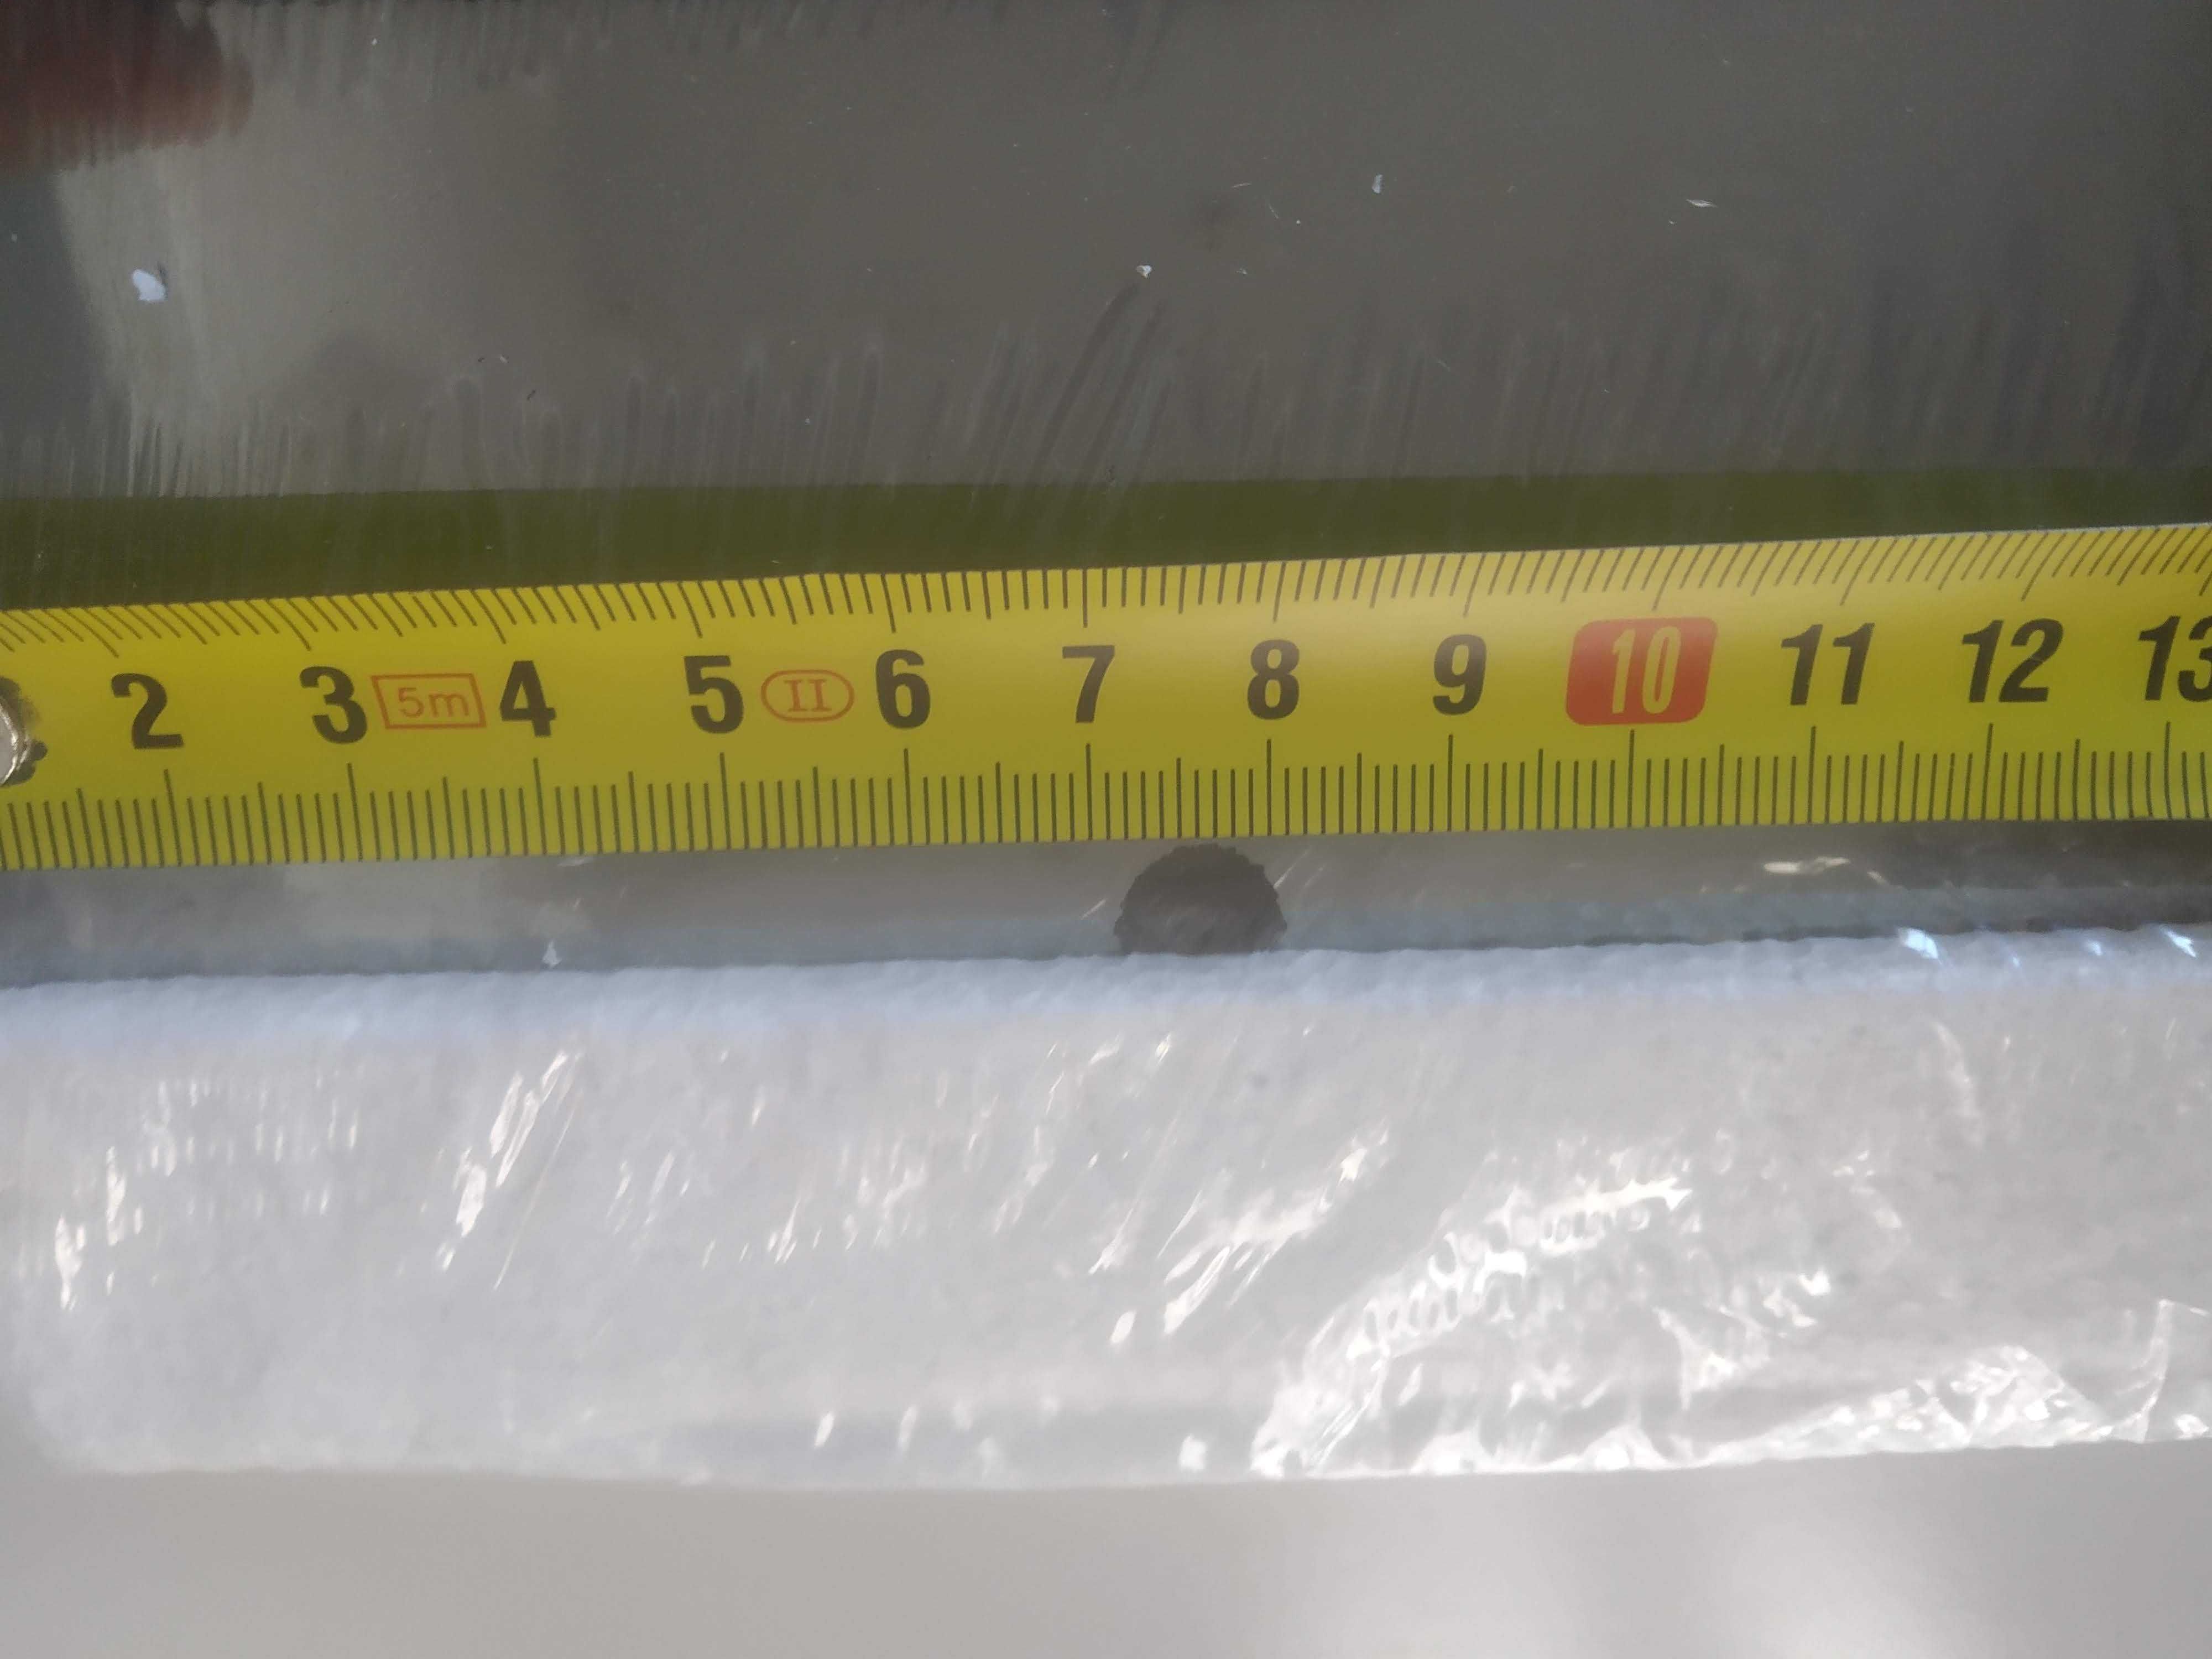 Geam exterior usa cuptor Electrolux 54.3x43.2 cm